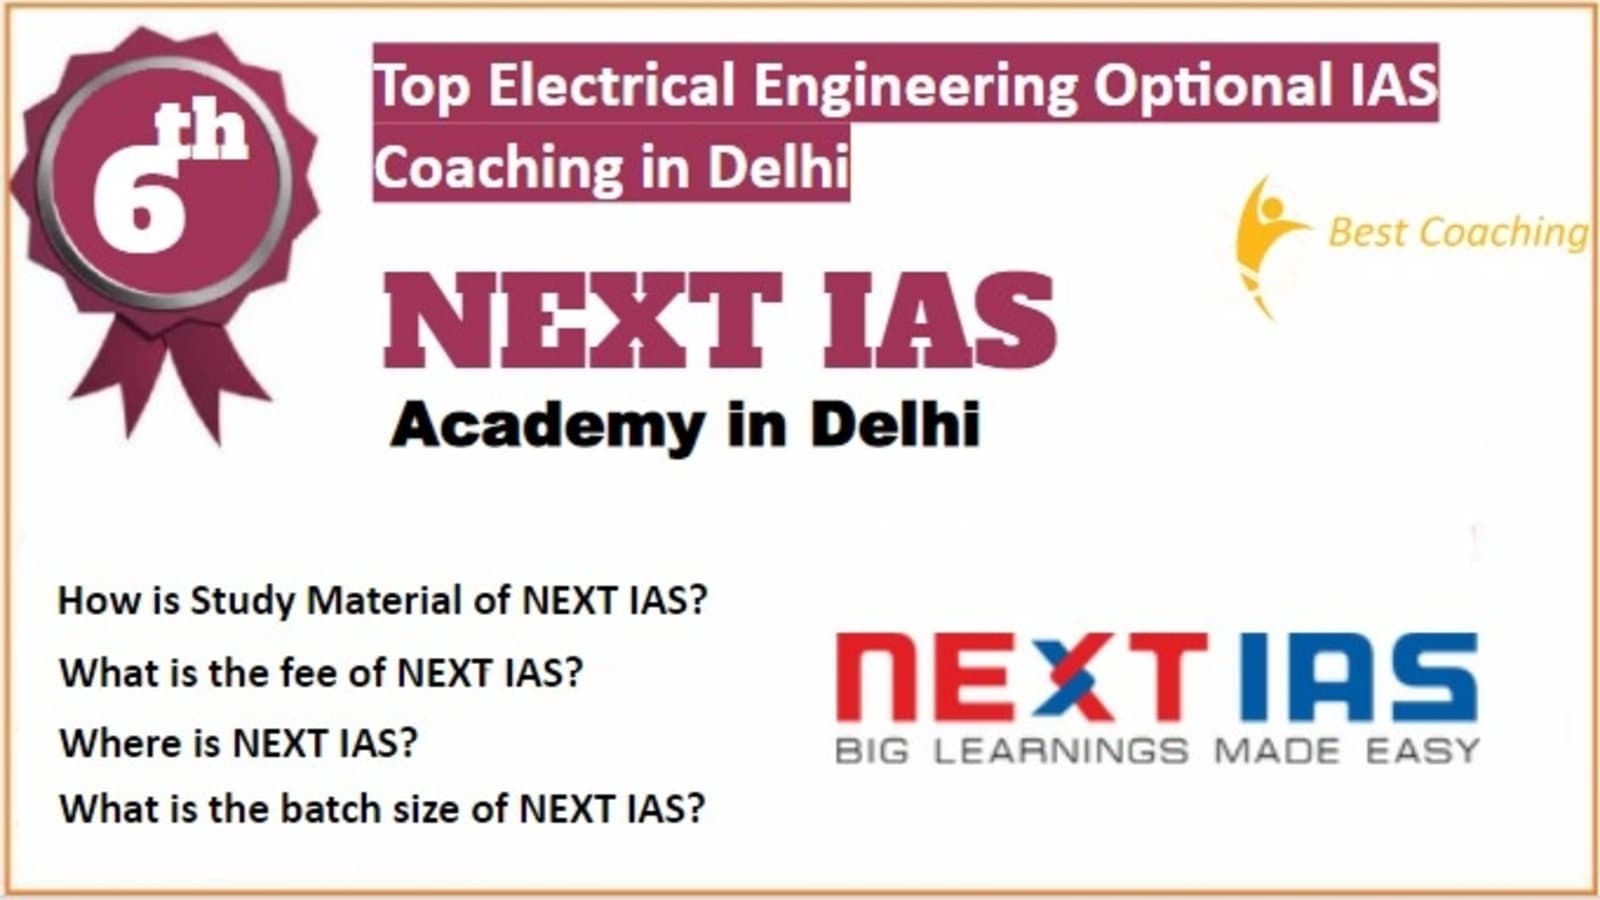 Rank 6 Best Electrical Engineering Optional IAS Coaching in Delhi